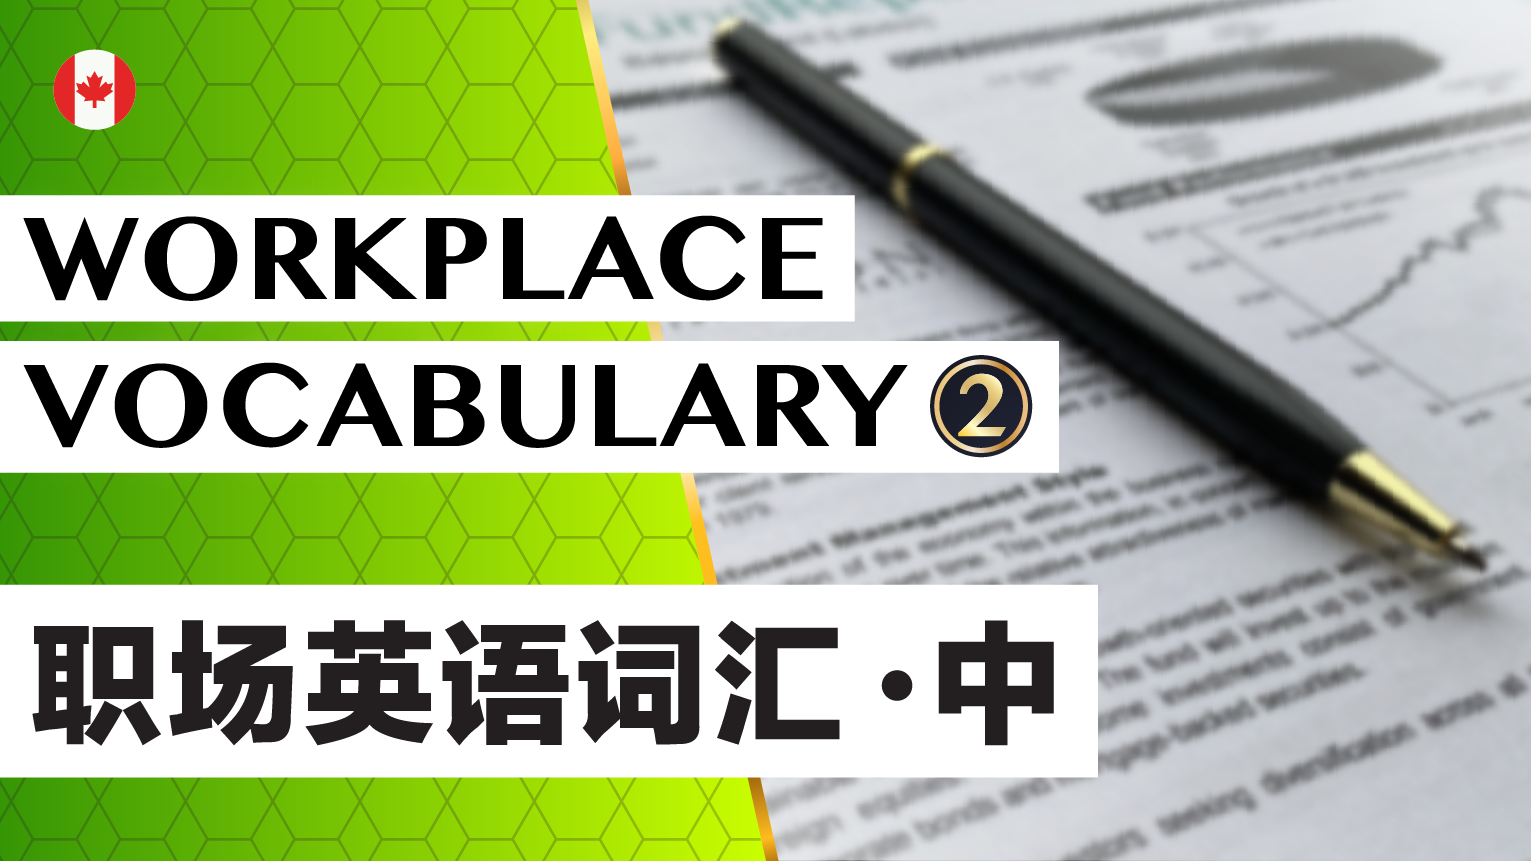 Workplace English Vocabulary - Part 2